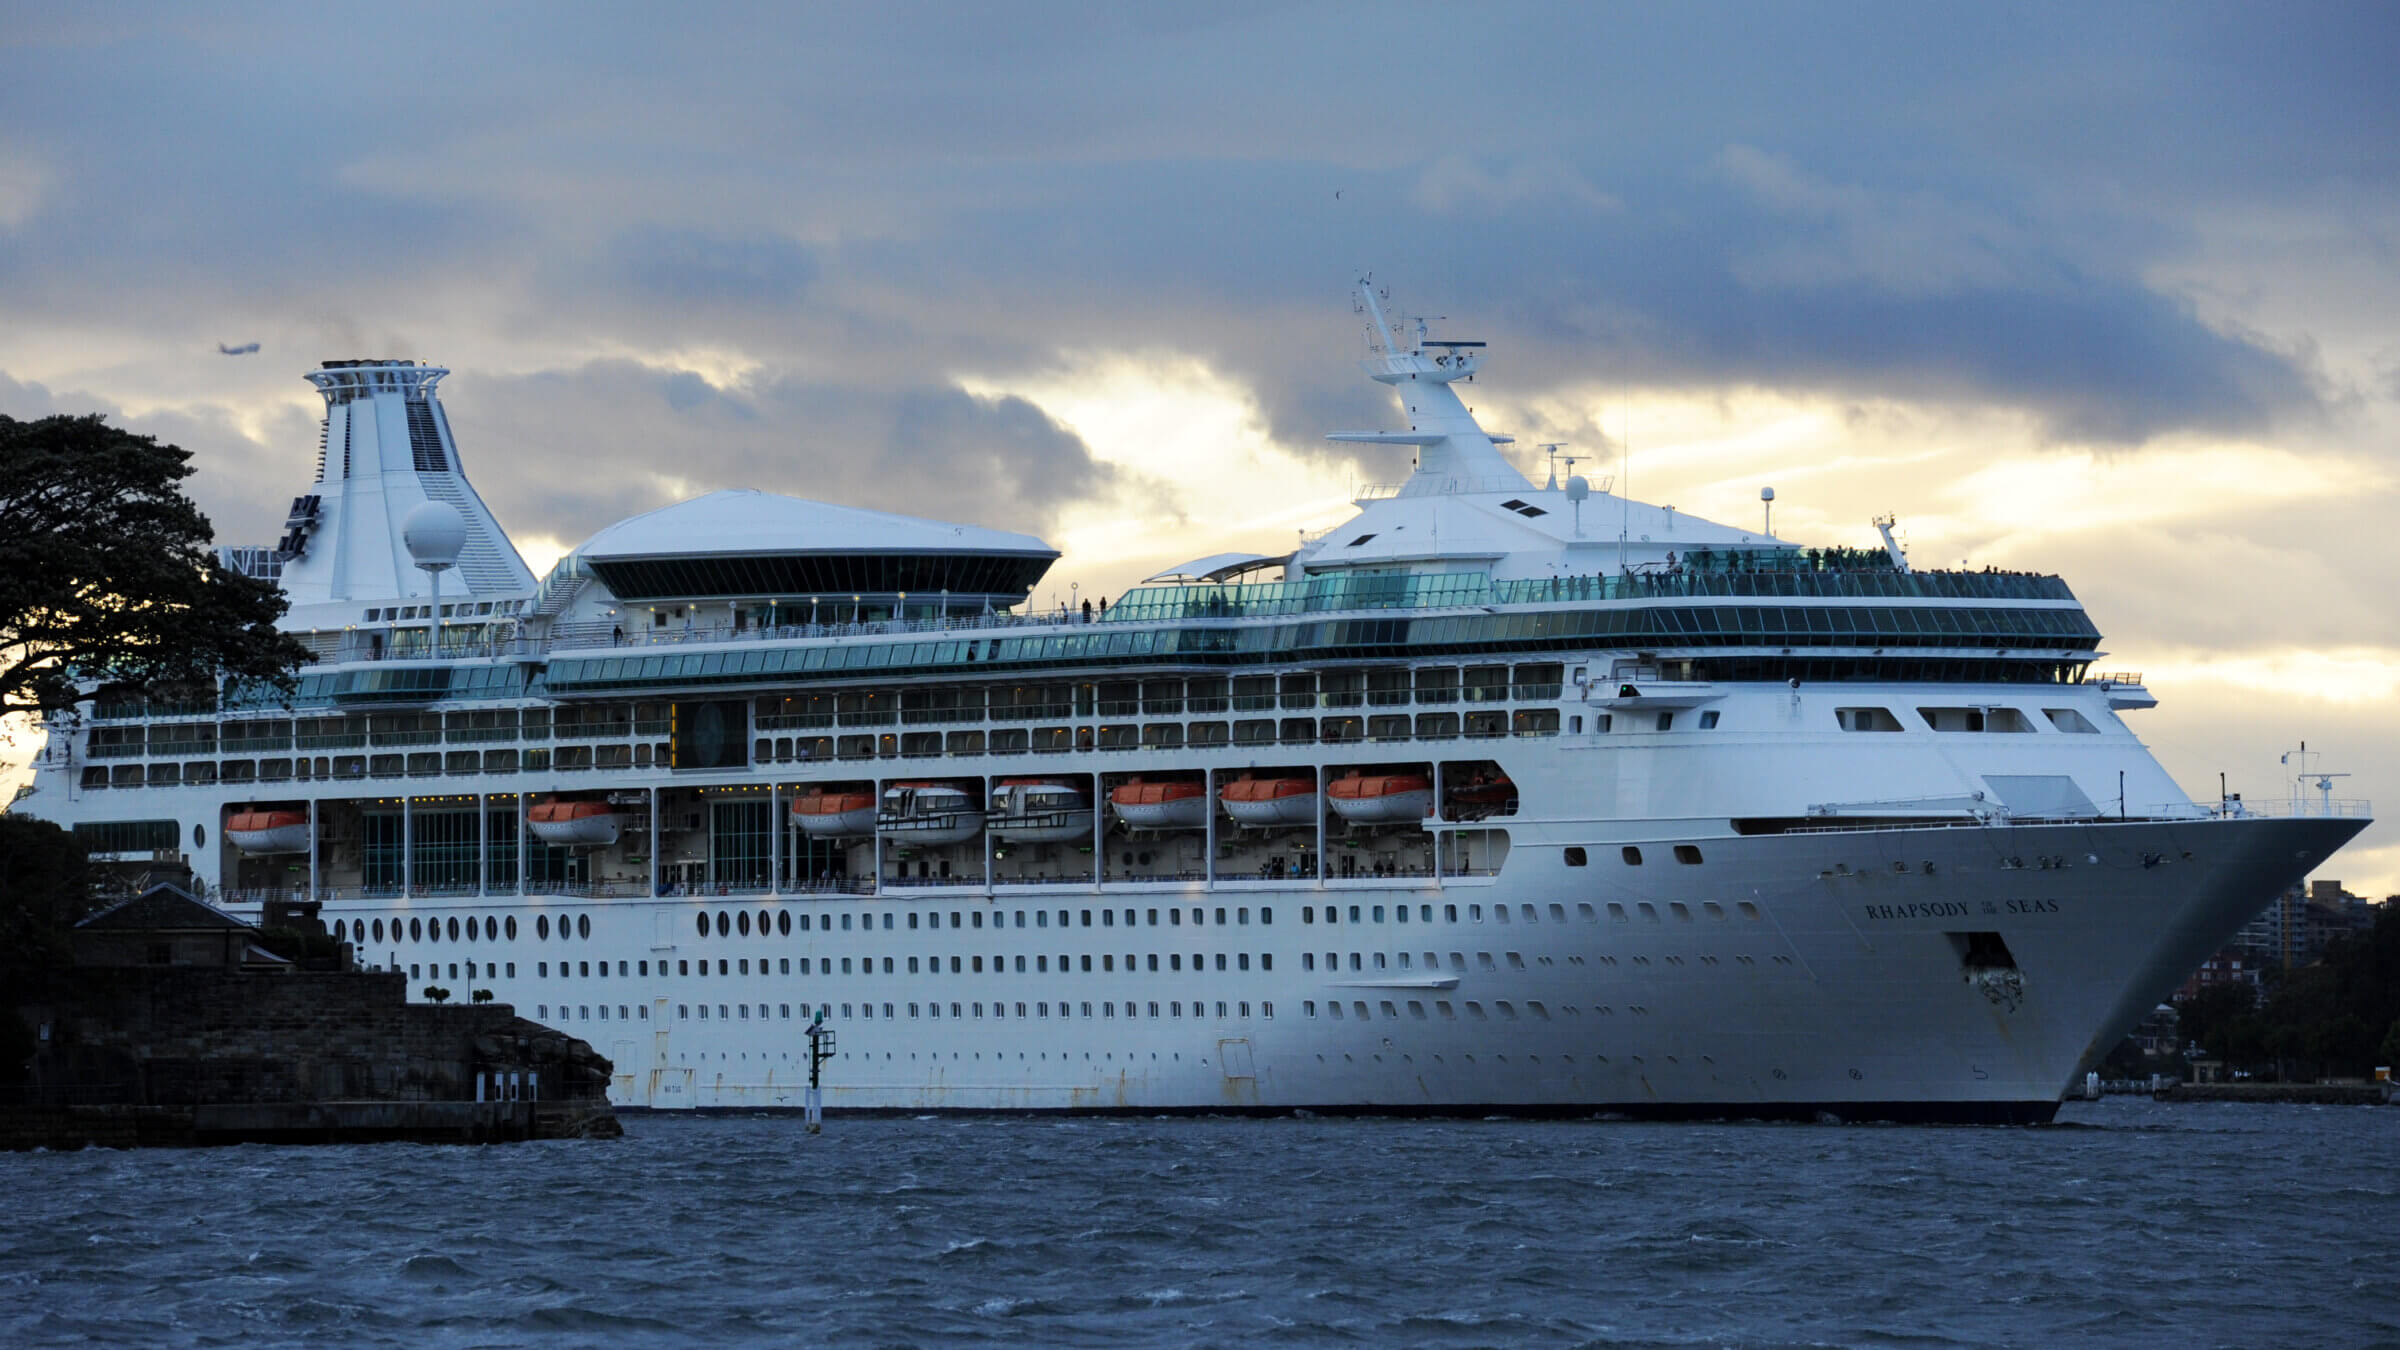 The <i>Rhapsody</i>, a Royal Caribbean cruise ship.